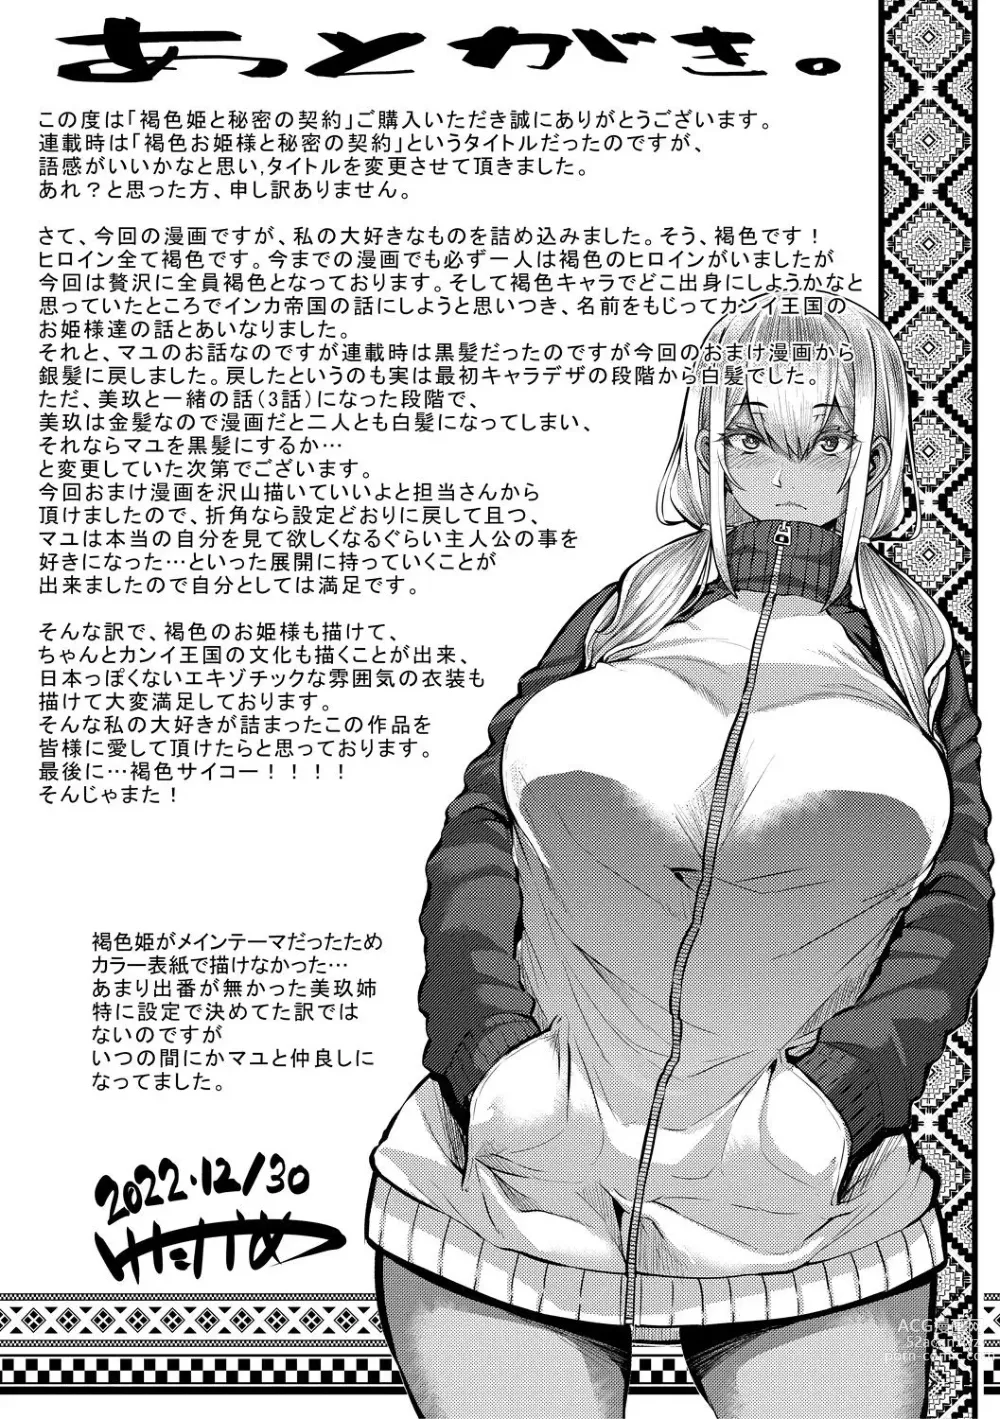 Page 209 of manga Kasshoku Hime to Himitsu no Keiyaku